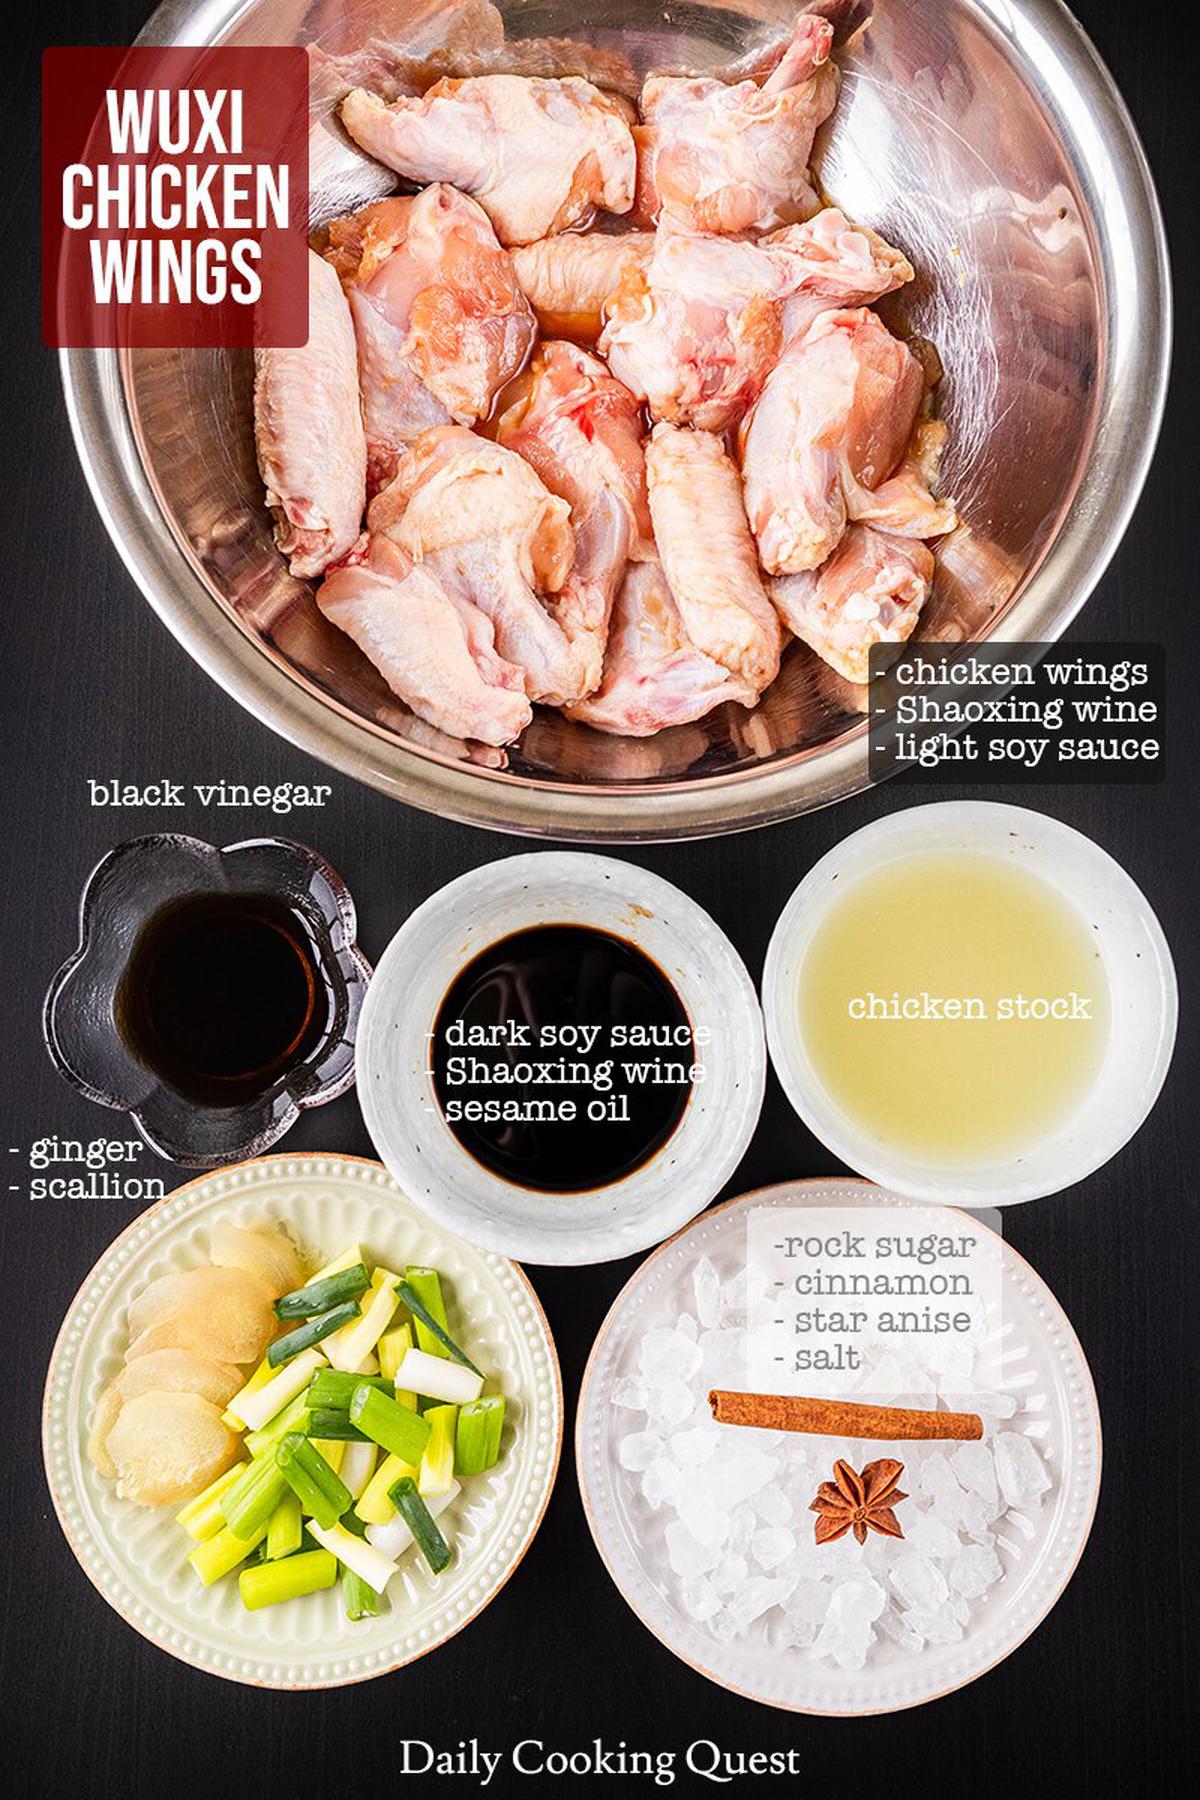 Ingredients to prepare Wuxi chicken wings: chicken wings, ginger, scallion, light soy sauce, dark soy sauce, Shaoxing wine, sesame oil, black vinegar, chicken stock, cinnamon, star anise, rock sugar, and salt.